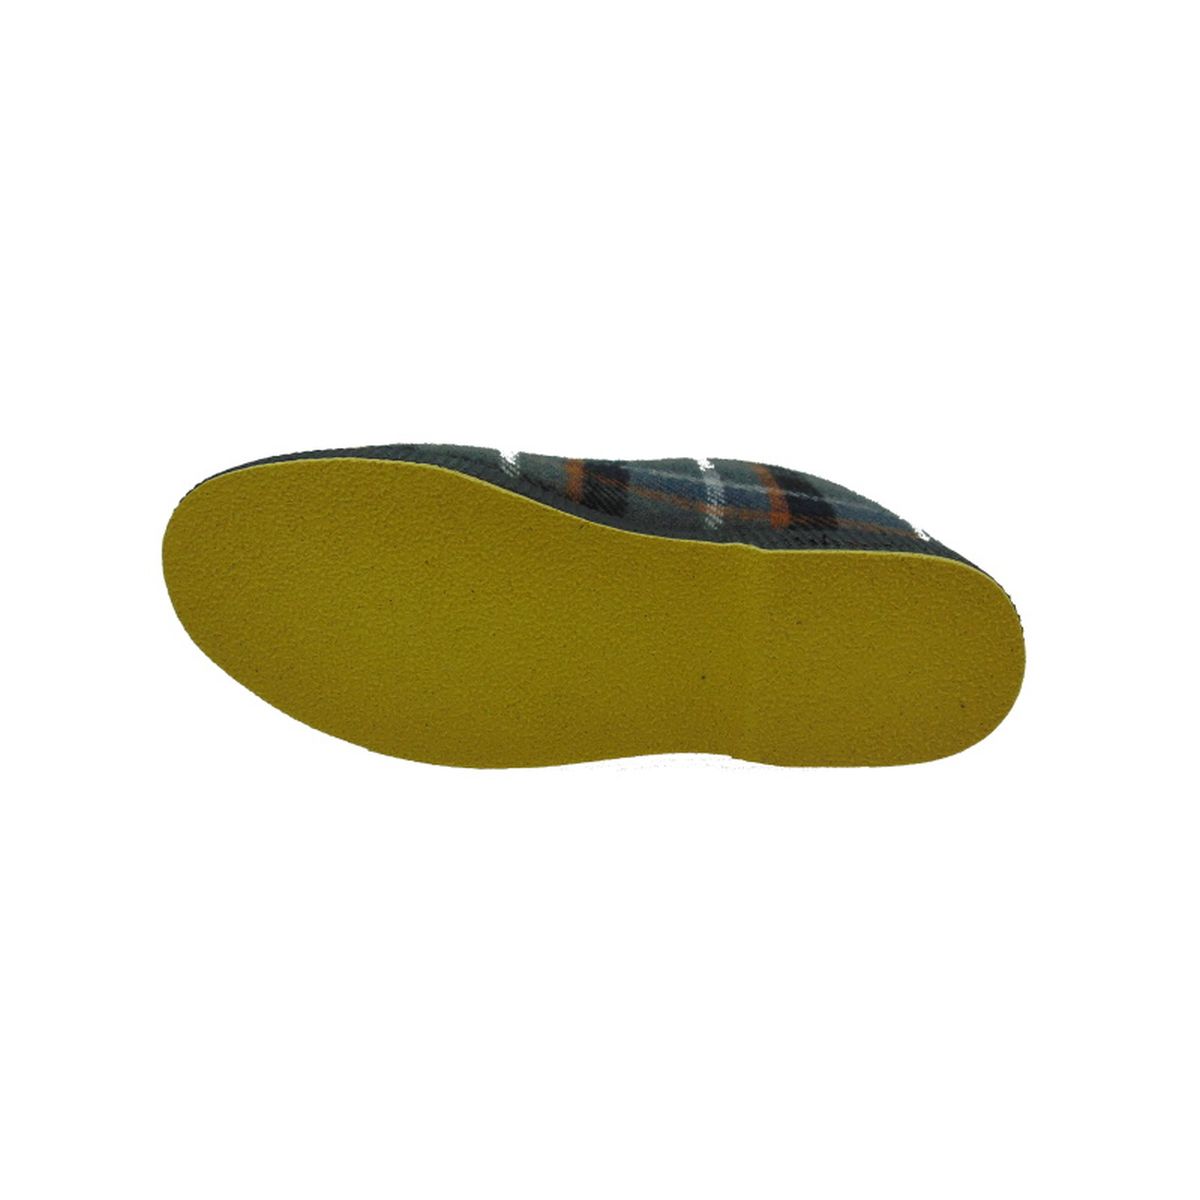 Pantofola Uomo con zip, Interno Lana, Emanuela 565 Grigio scozzese